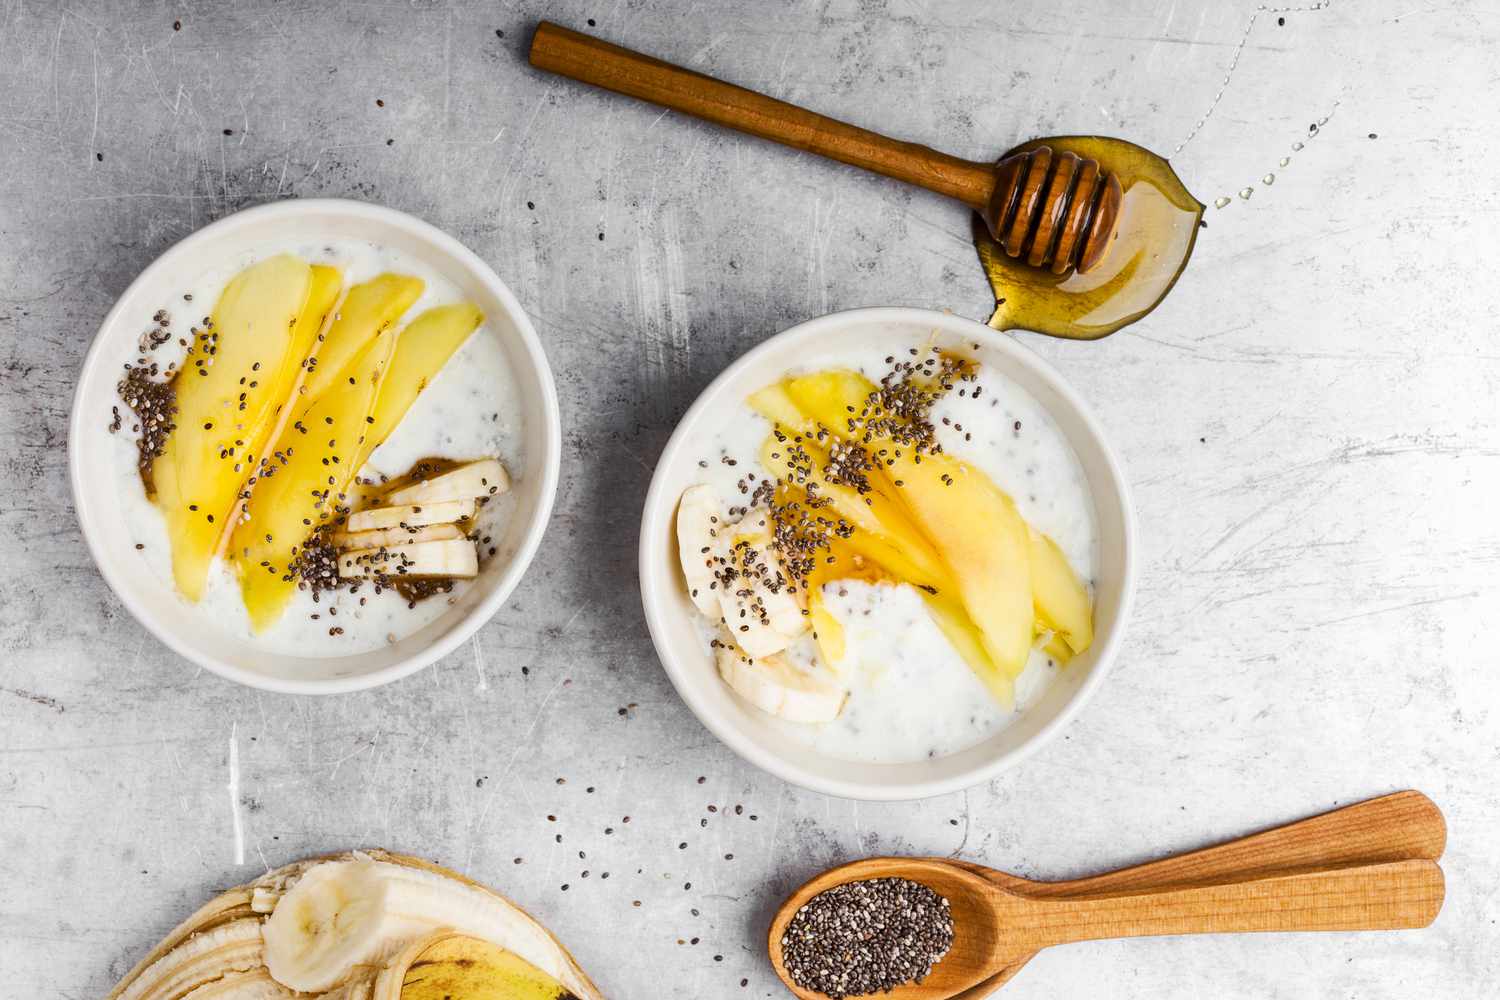 Greek yogurt bowls with mango, banana, chia seeds, and honey